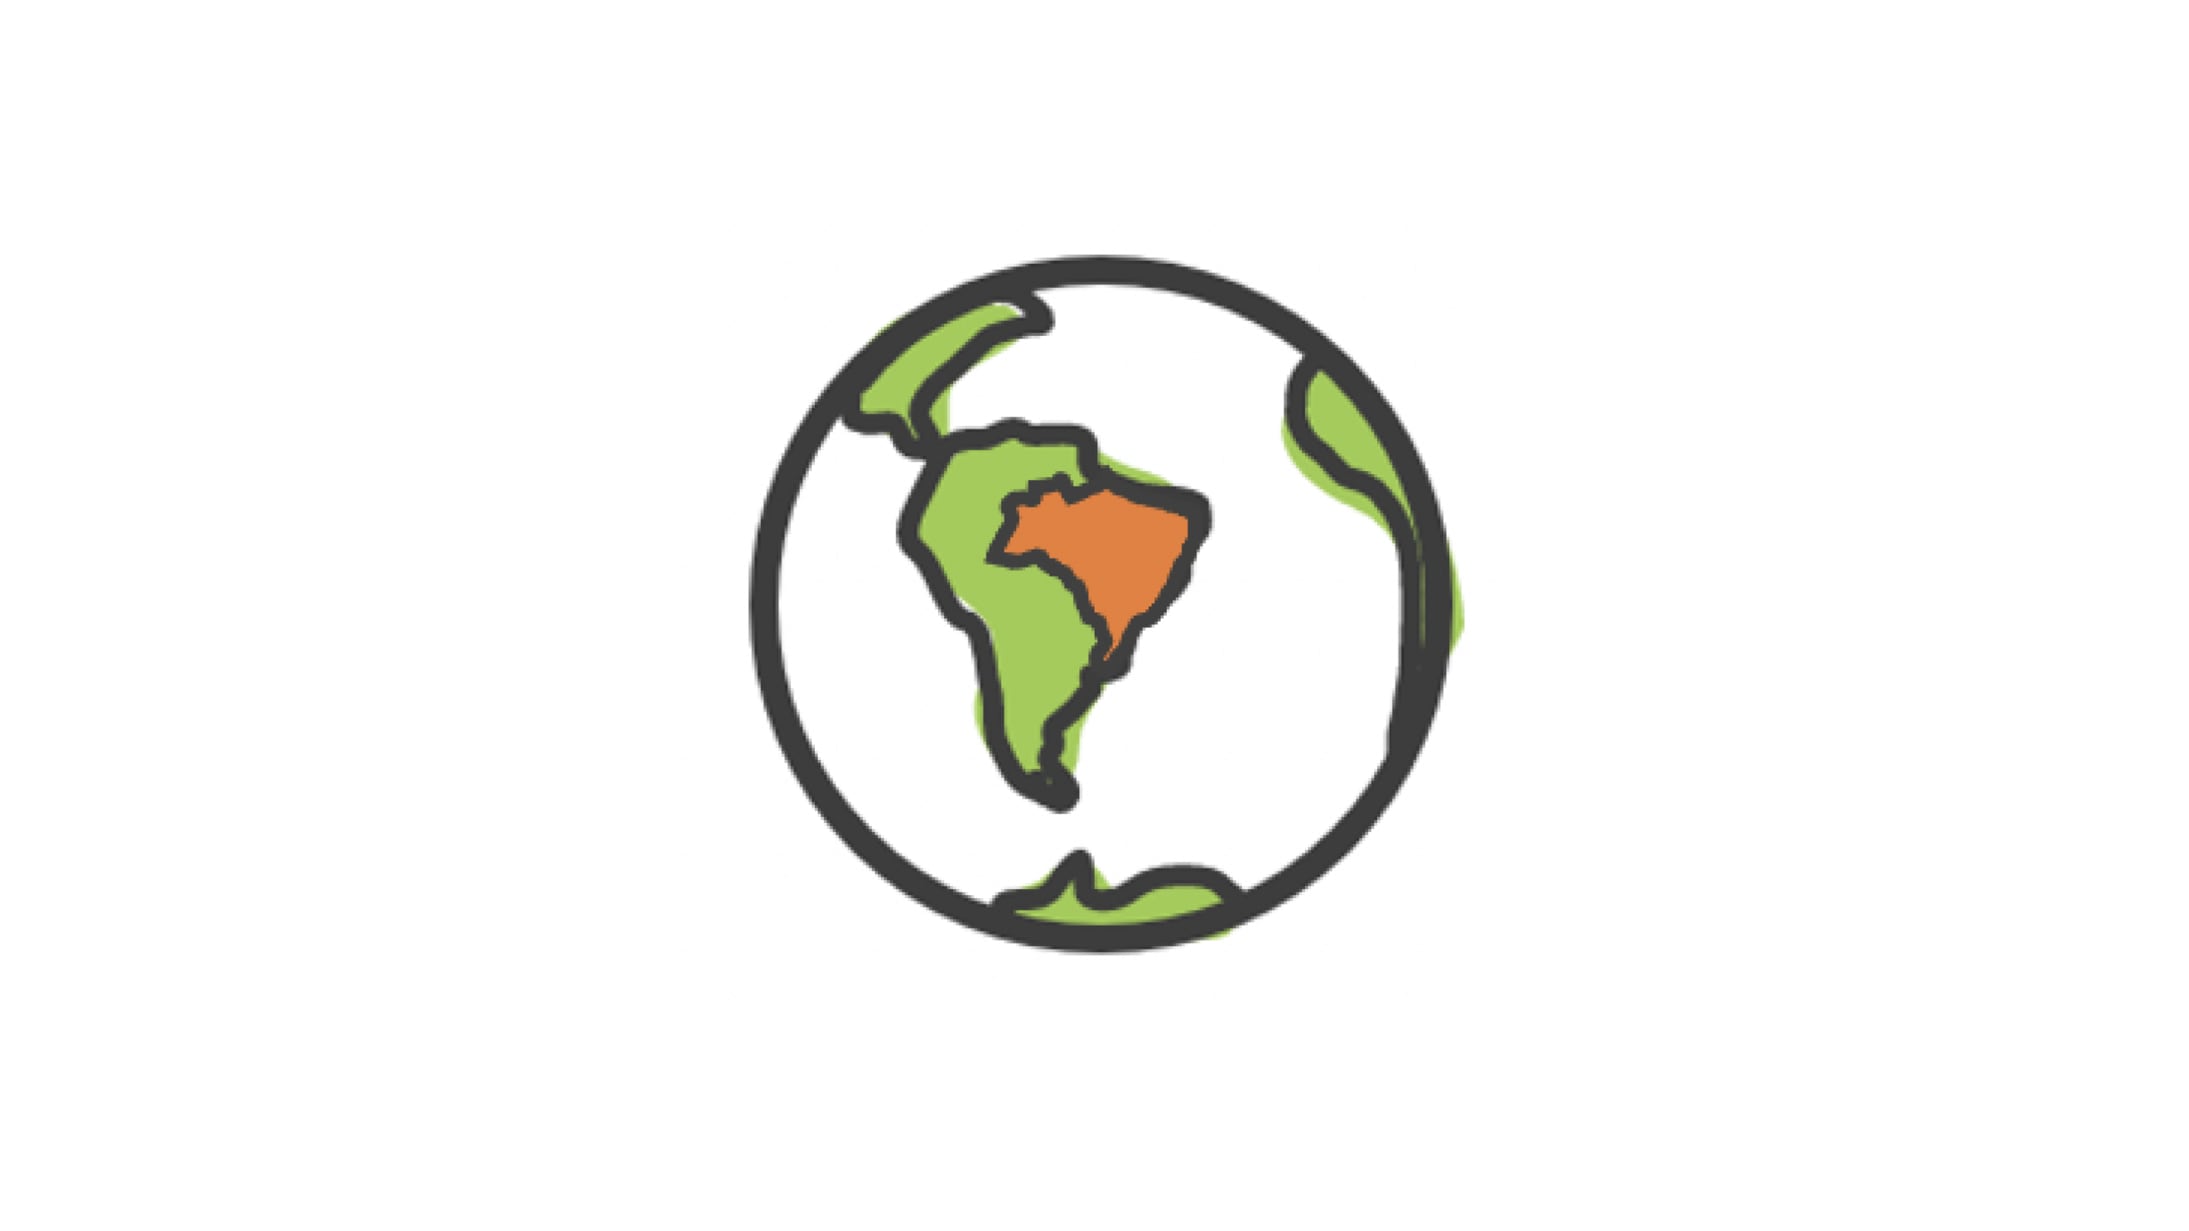 Treeapp’s world icon showing Brazil